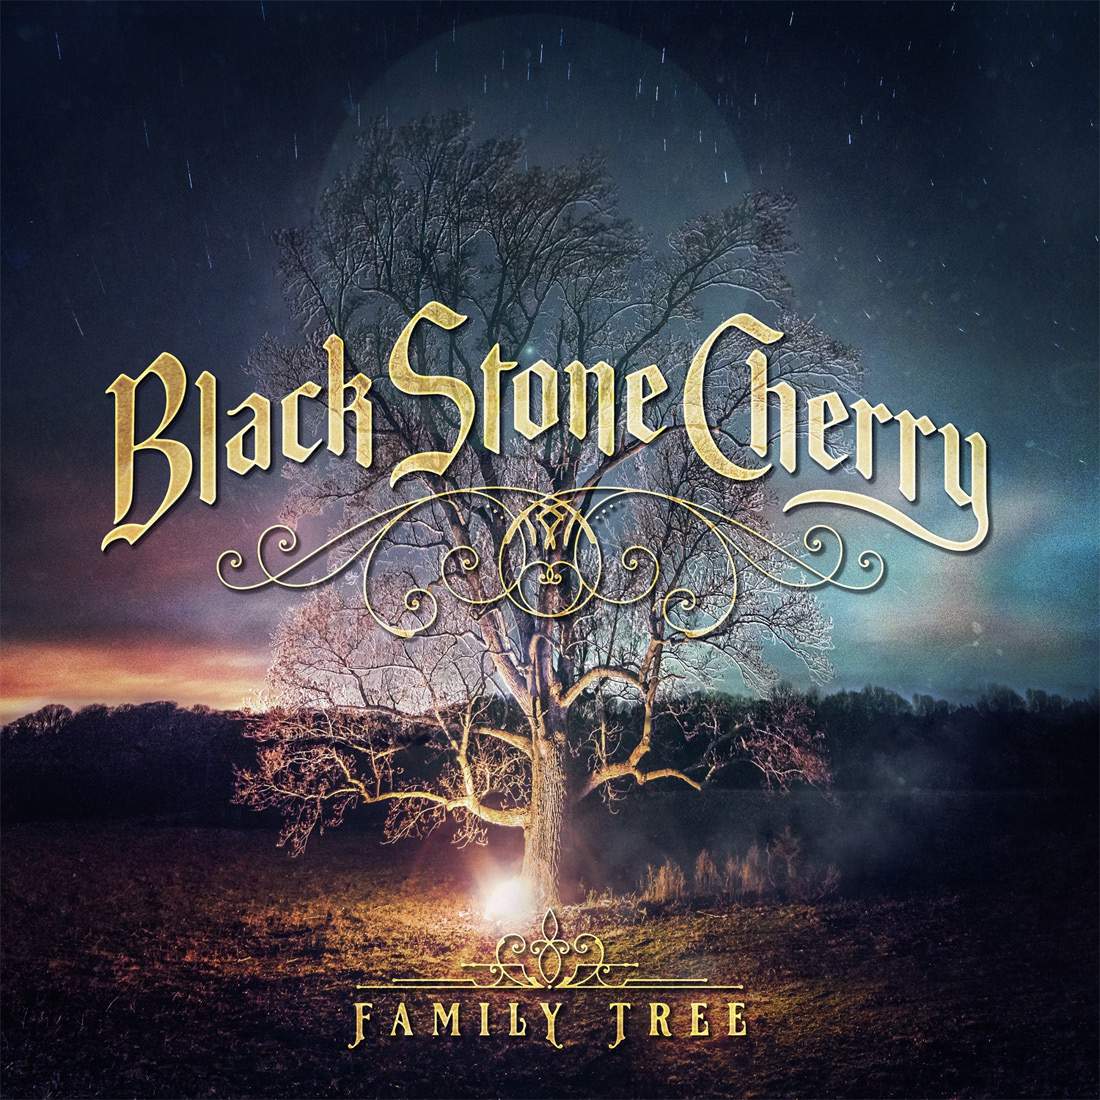 Black Stone Cherry 2018 